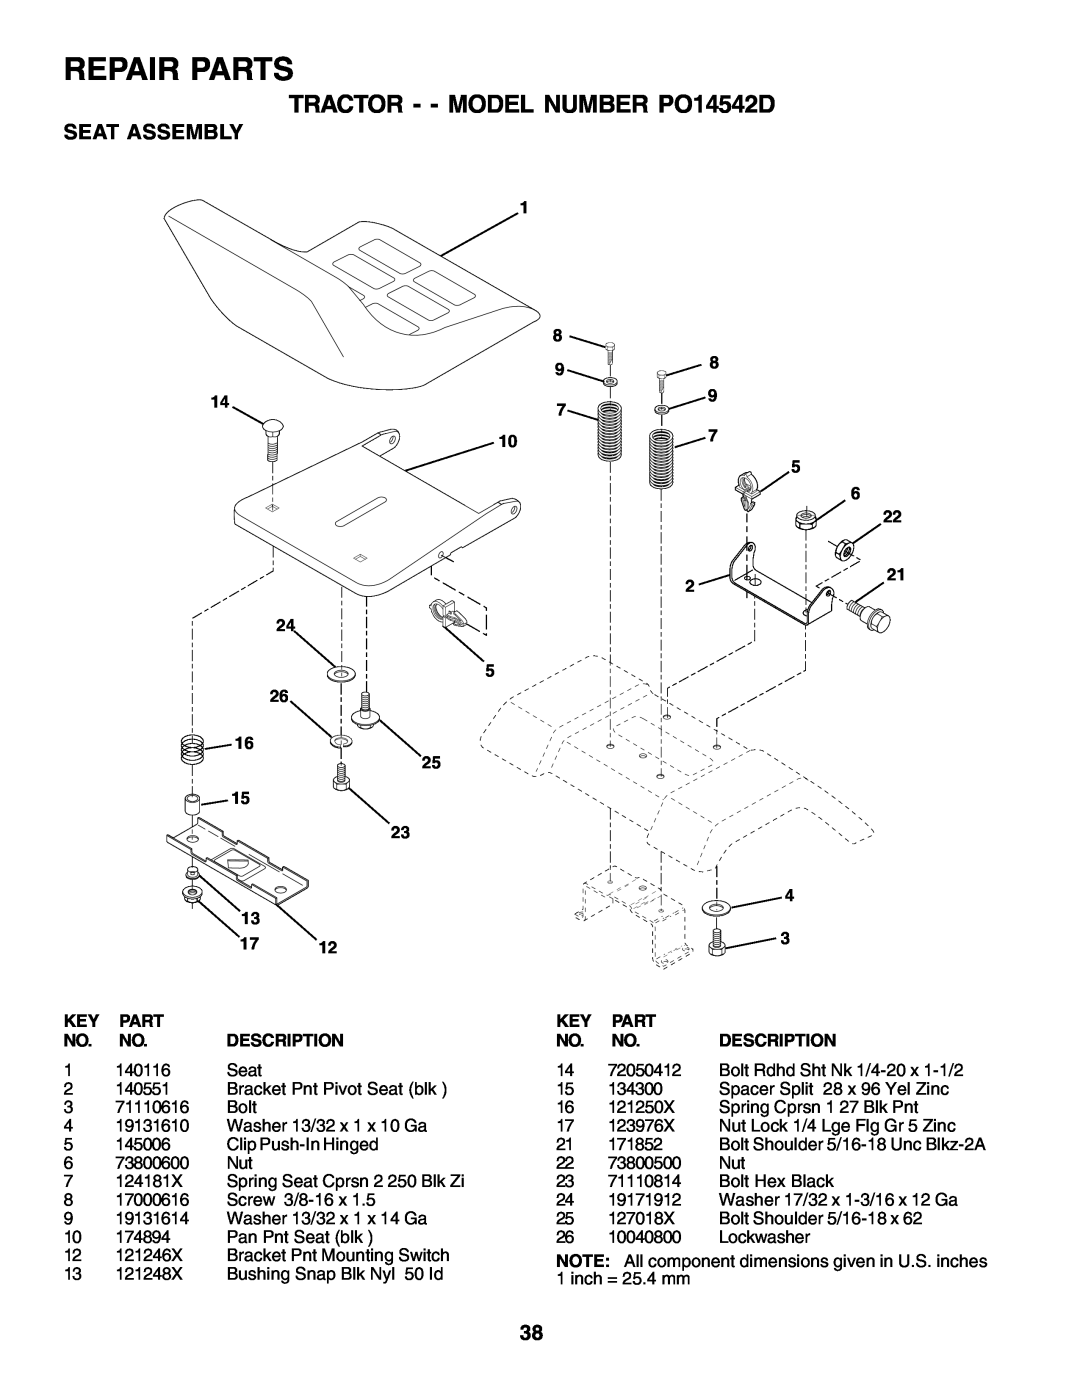 Poulan manual Repair Parts, TRACTOR - - MODEL NUMBER PO14542D, Seat Assembly, Description 